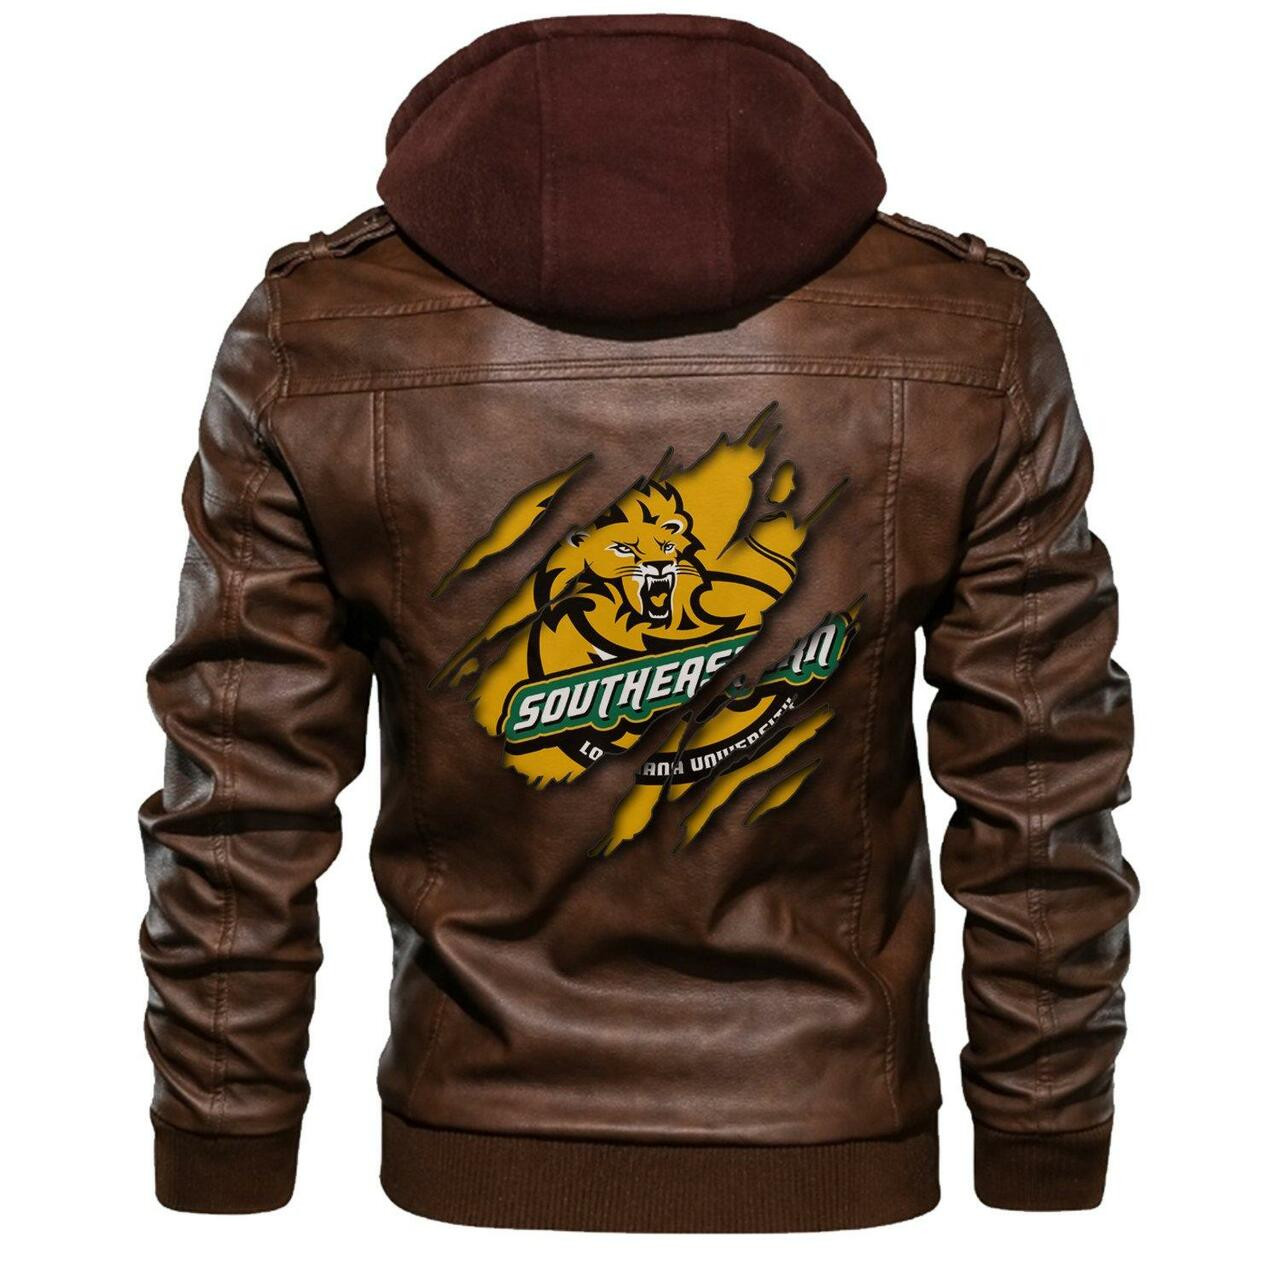 Top leather jacket Sells Best on Techcomshop 24